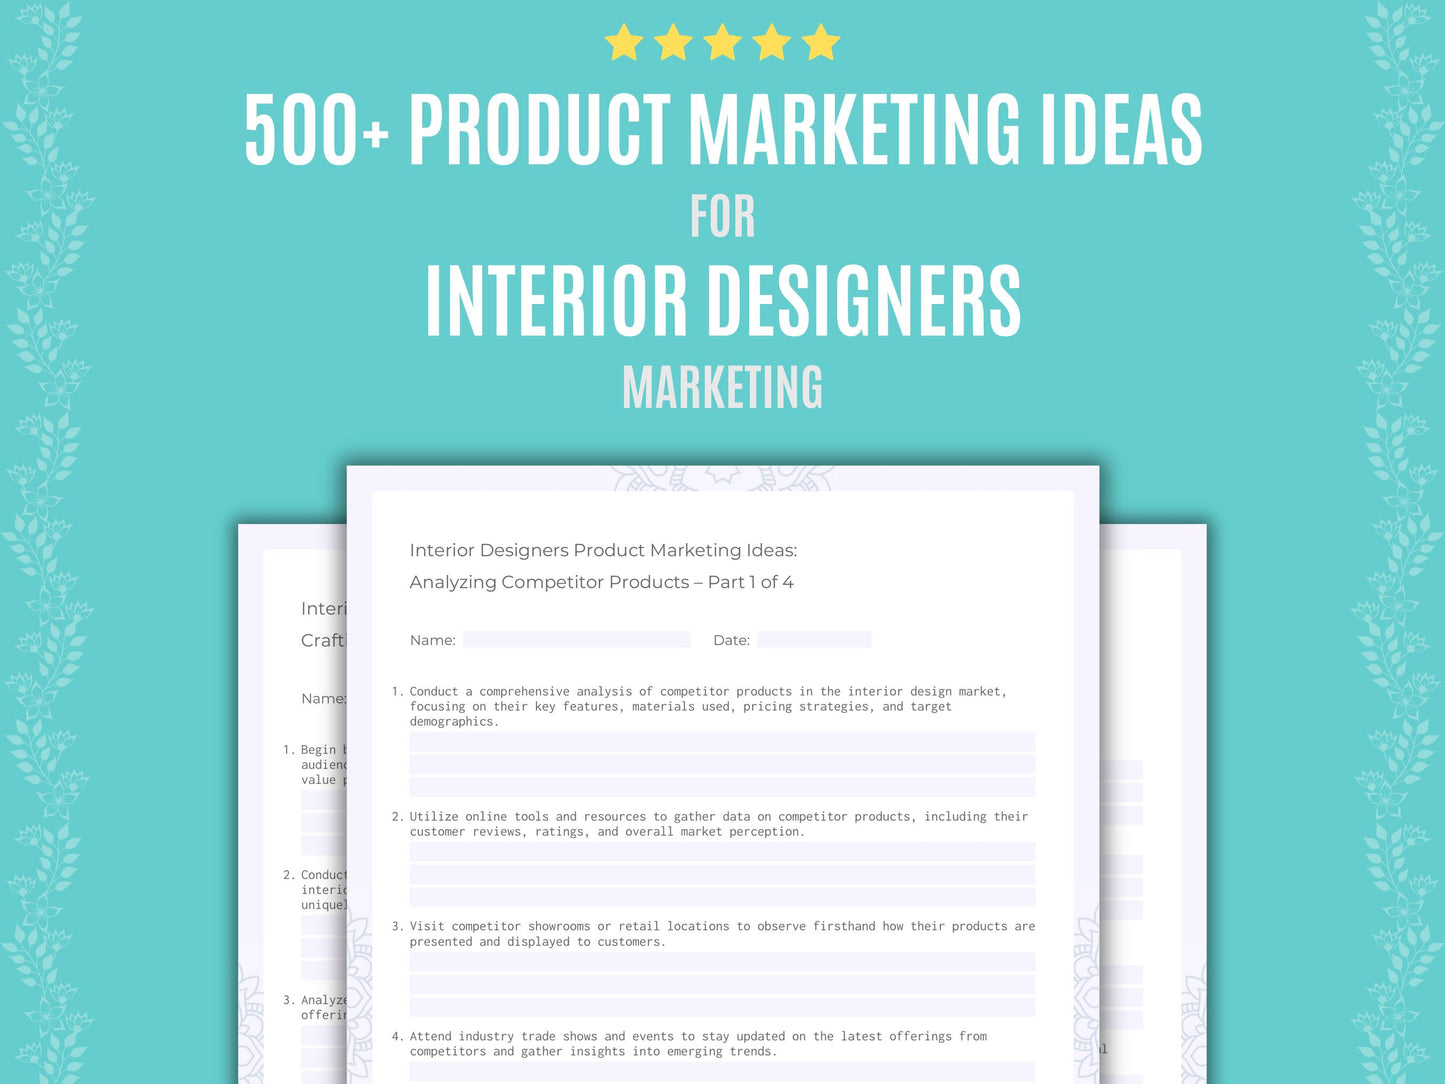 Interior Designers Product Marketing Ideas